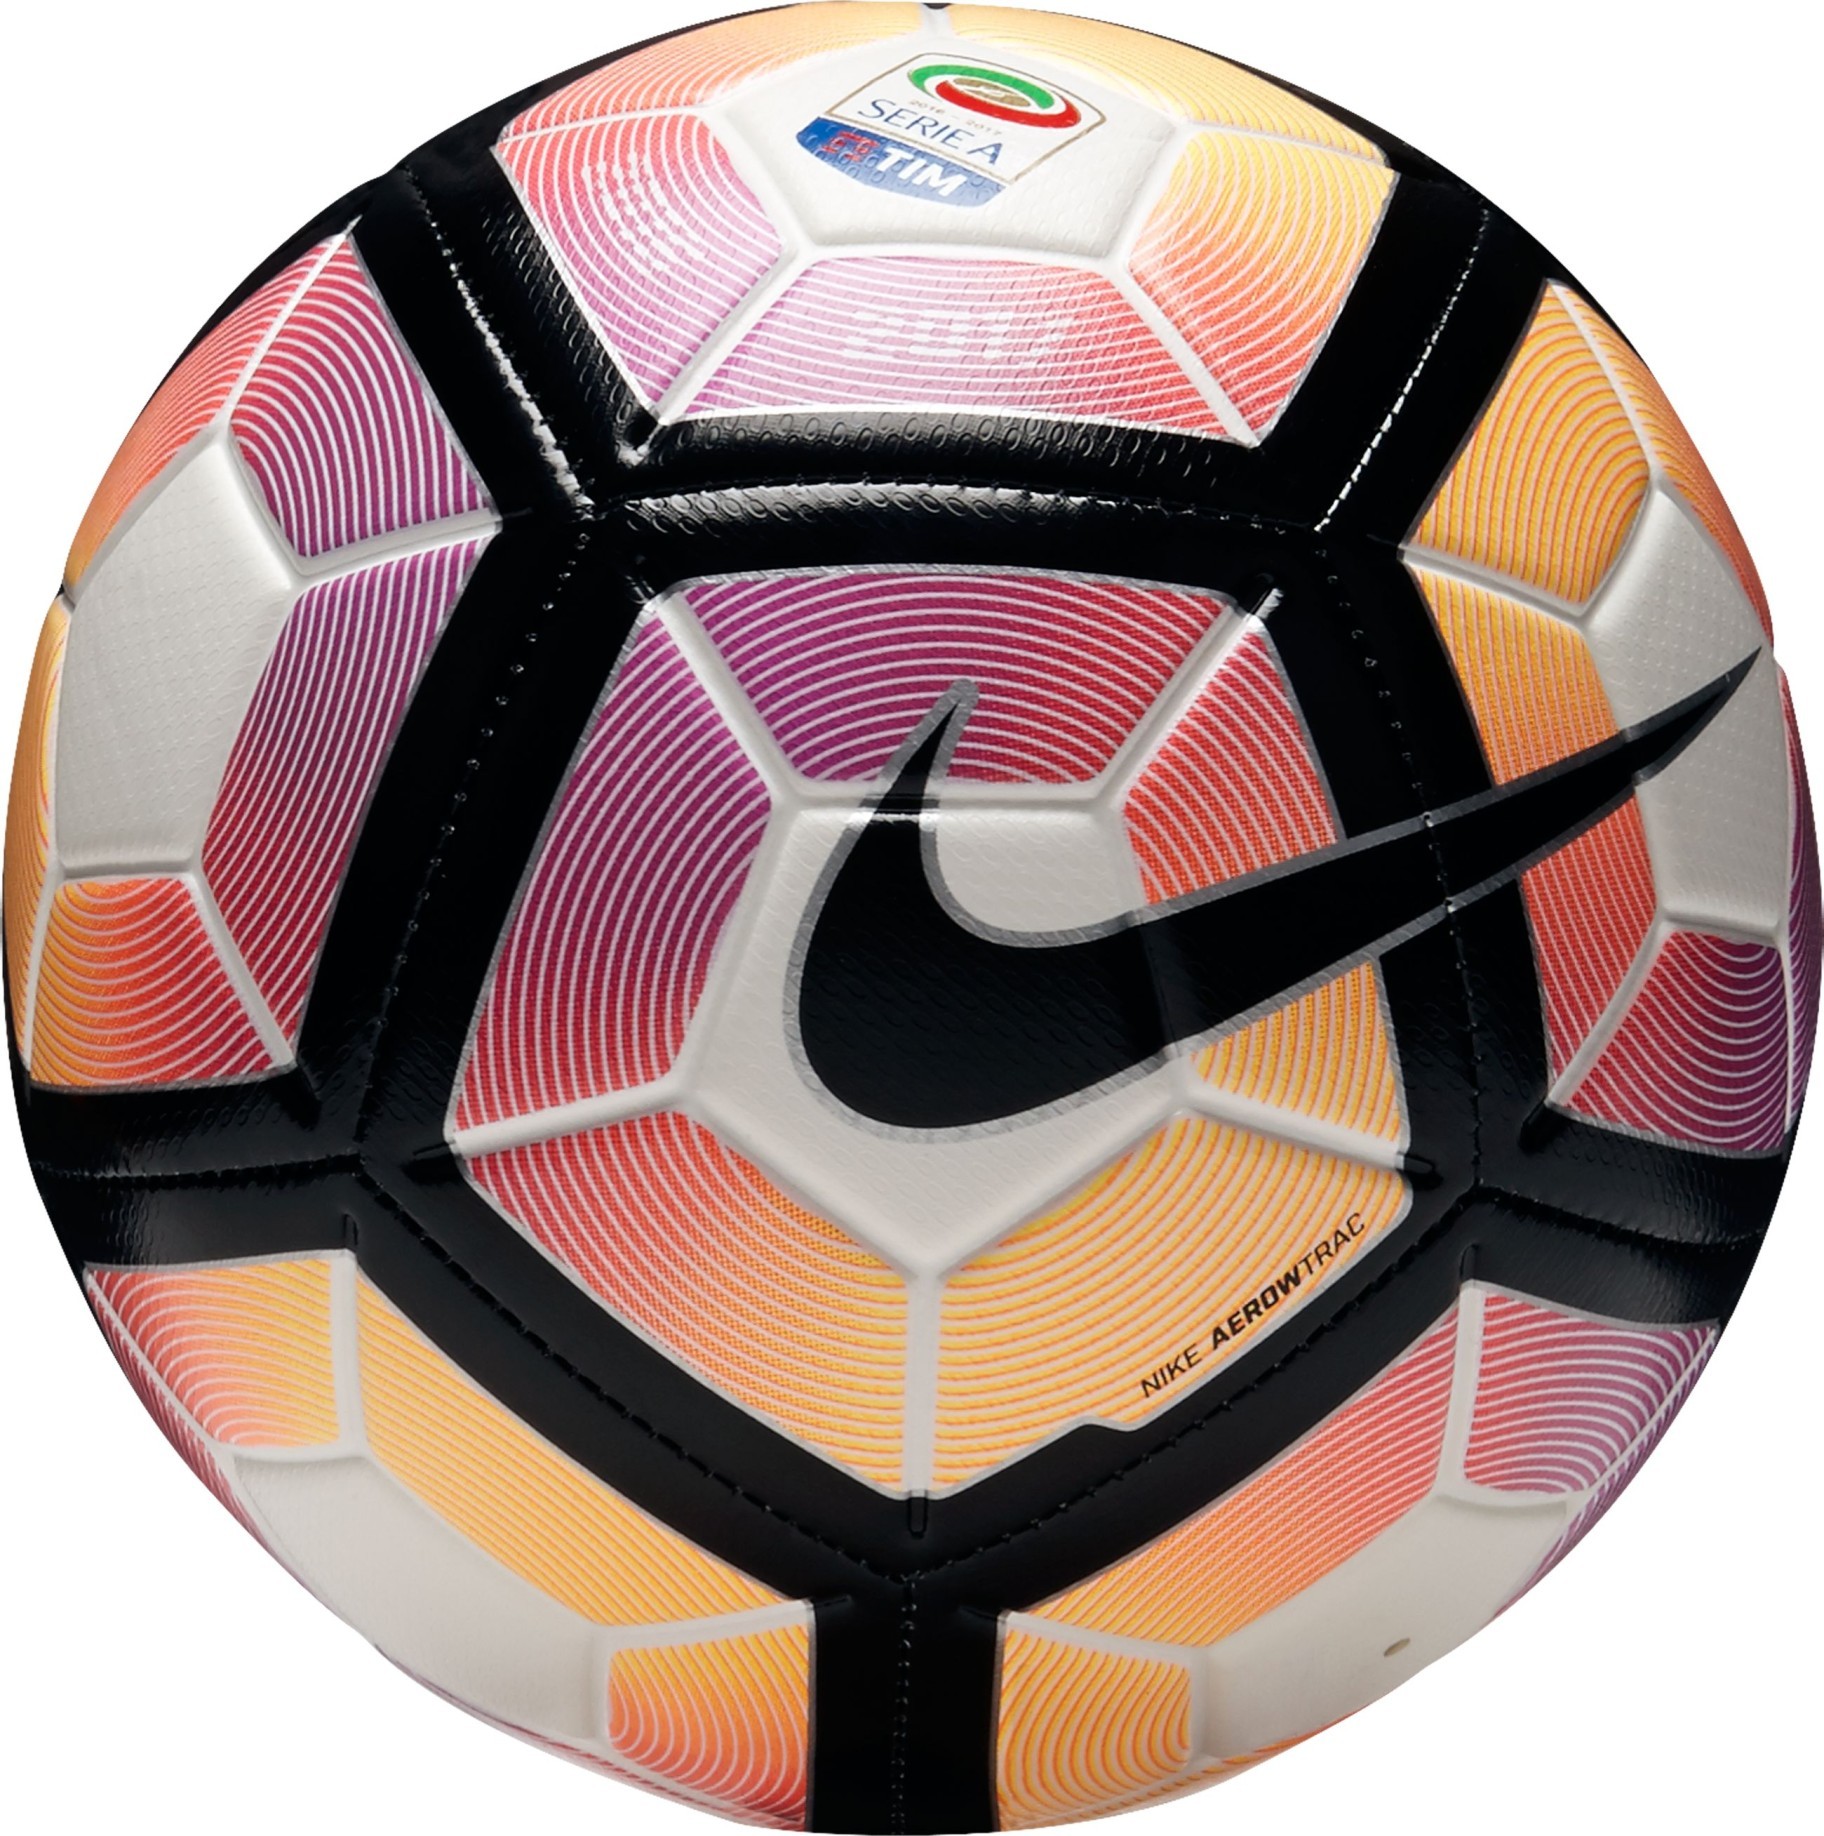 Balón De Fútbol Nike Strike Serie 16/17 colore fantasía - Nike - SportIT.com